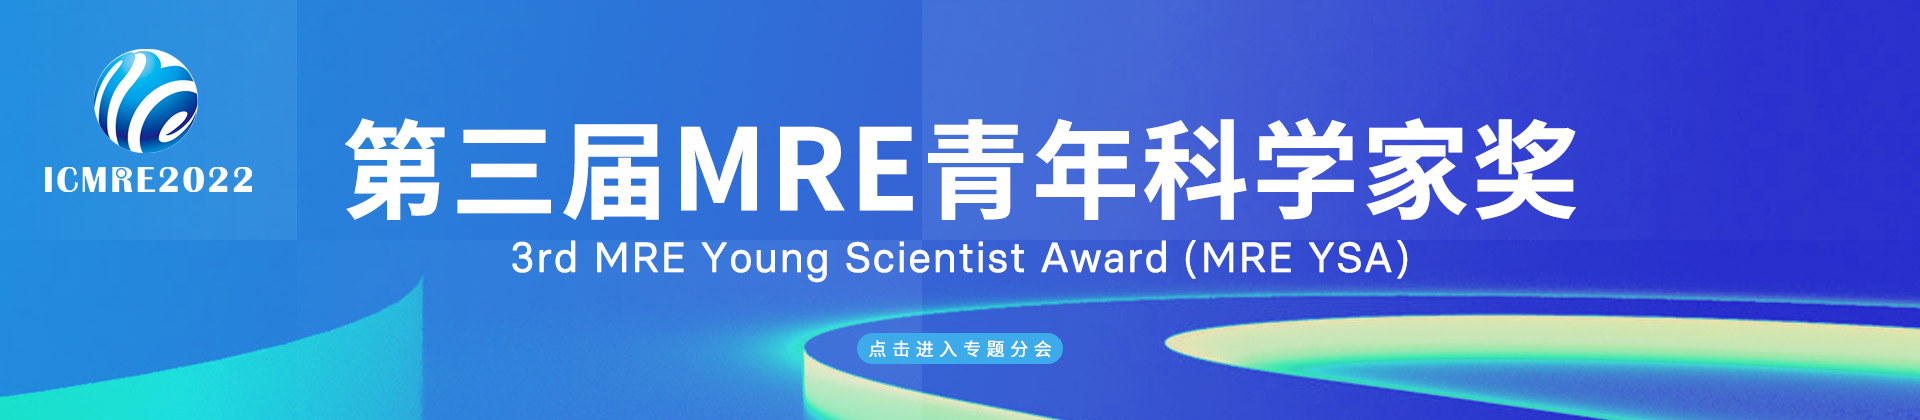 MRE青年科学家奖-PC banner.jpg